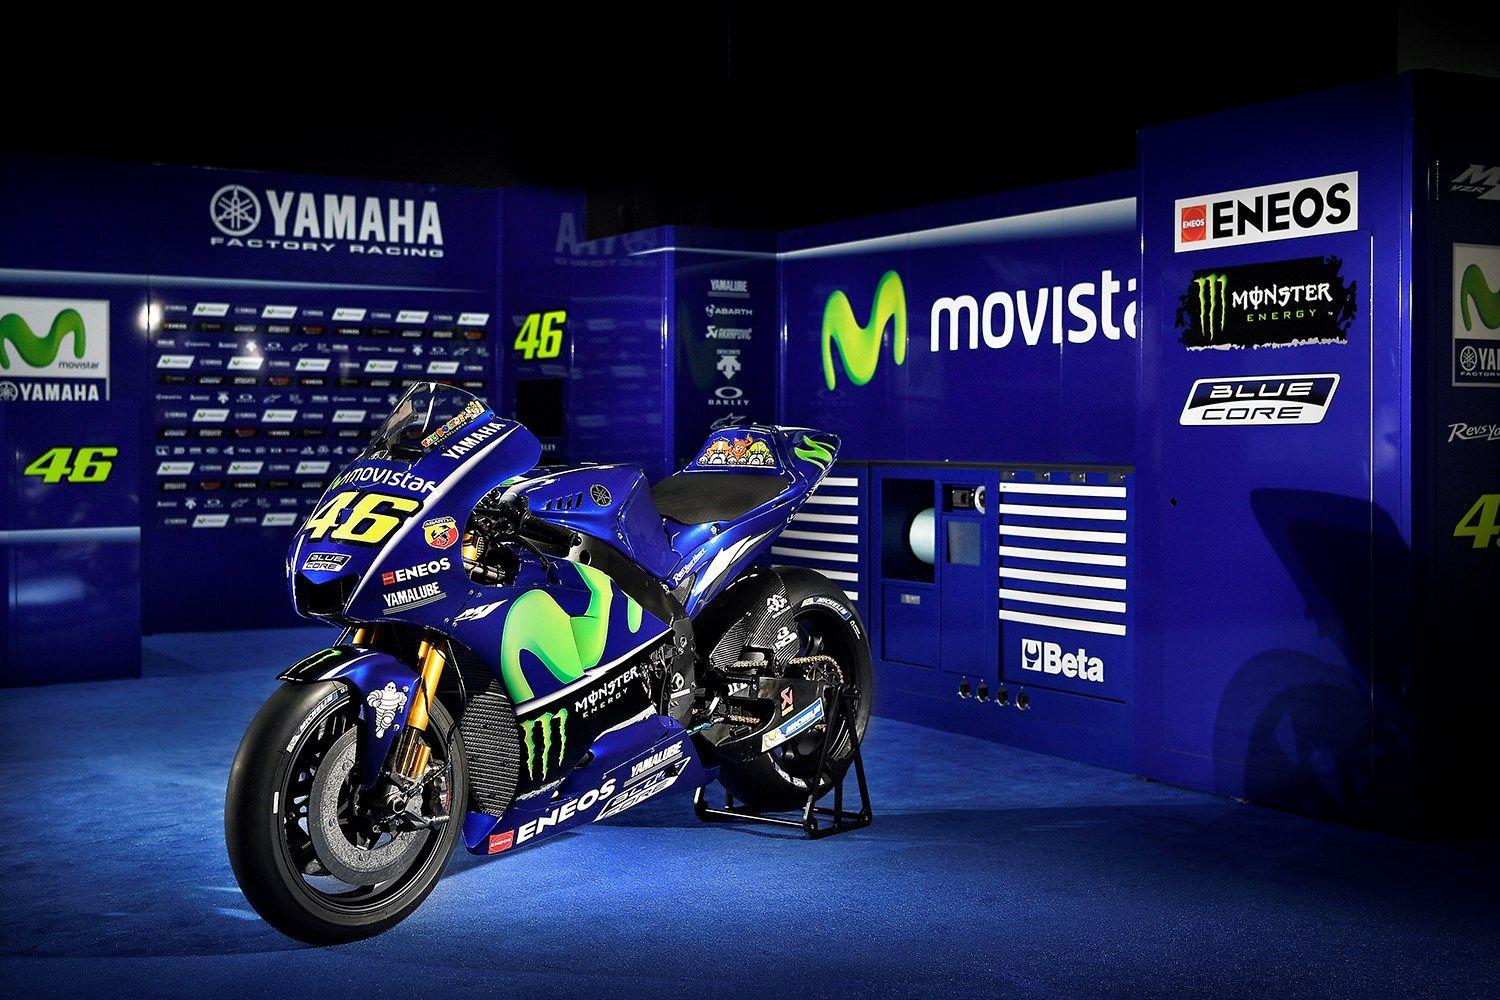 MotoGP: Yamaha unveil 2017 Movistar colours in Madrid